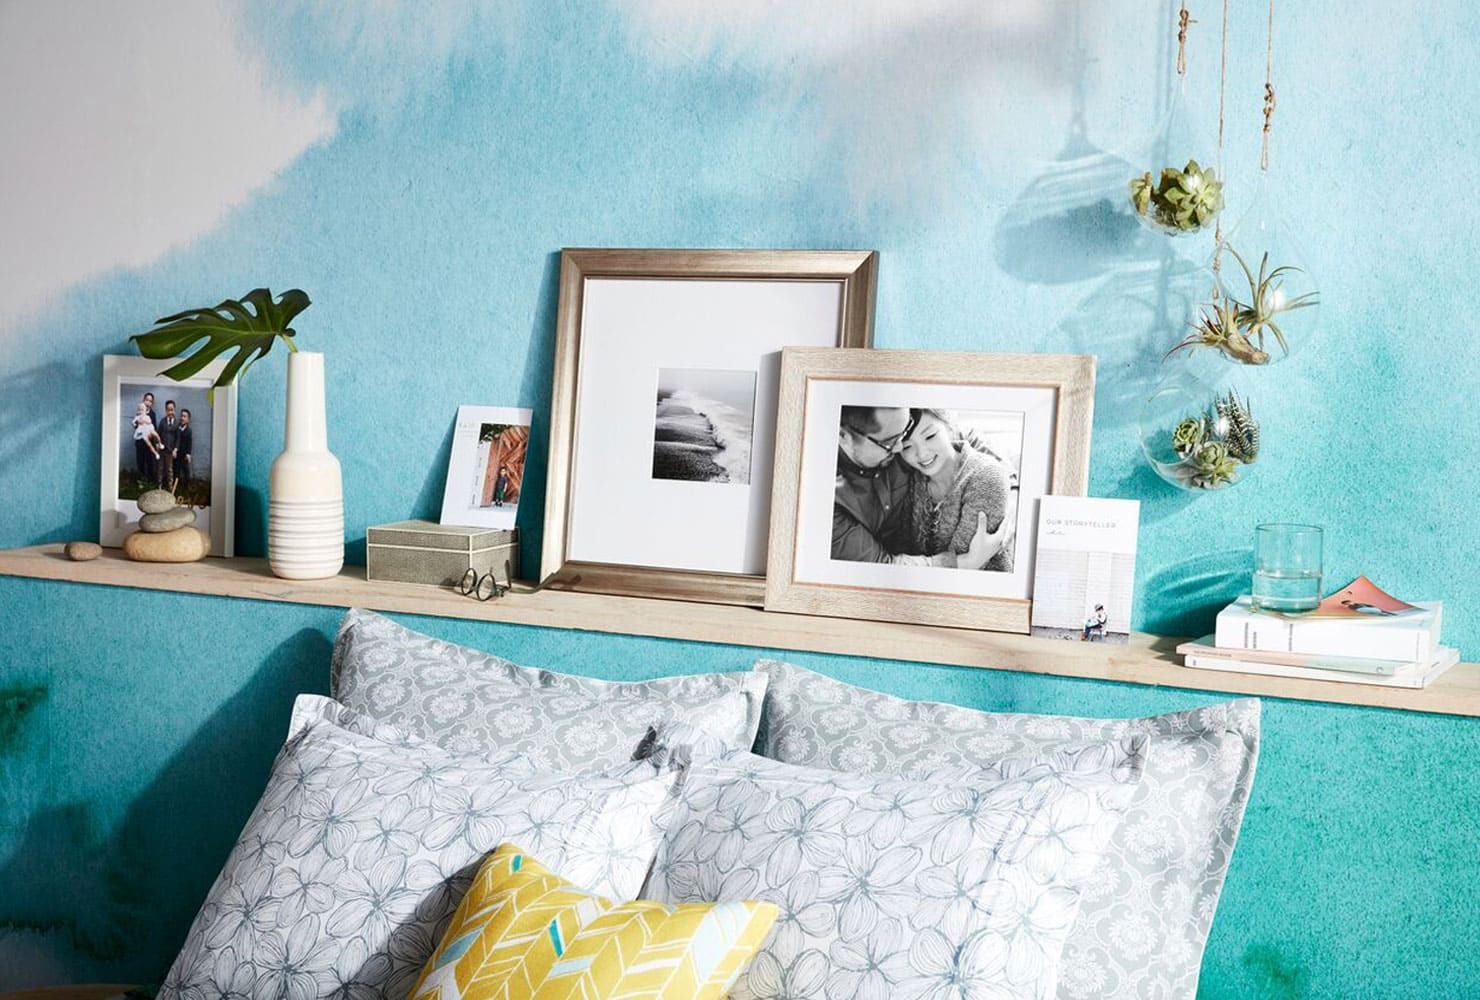 Bedroom Decorations DIY
 24 DIY Bedroom Decor Ideas To Inspire You With Printables